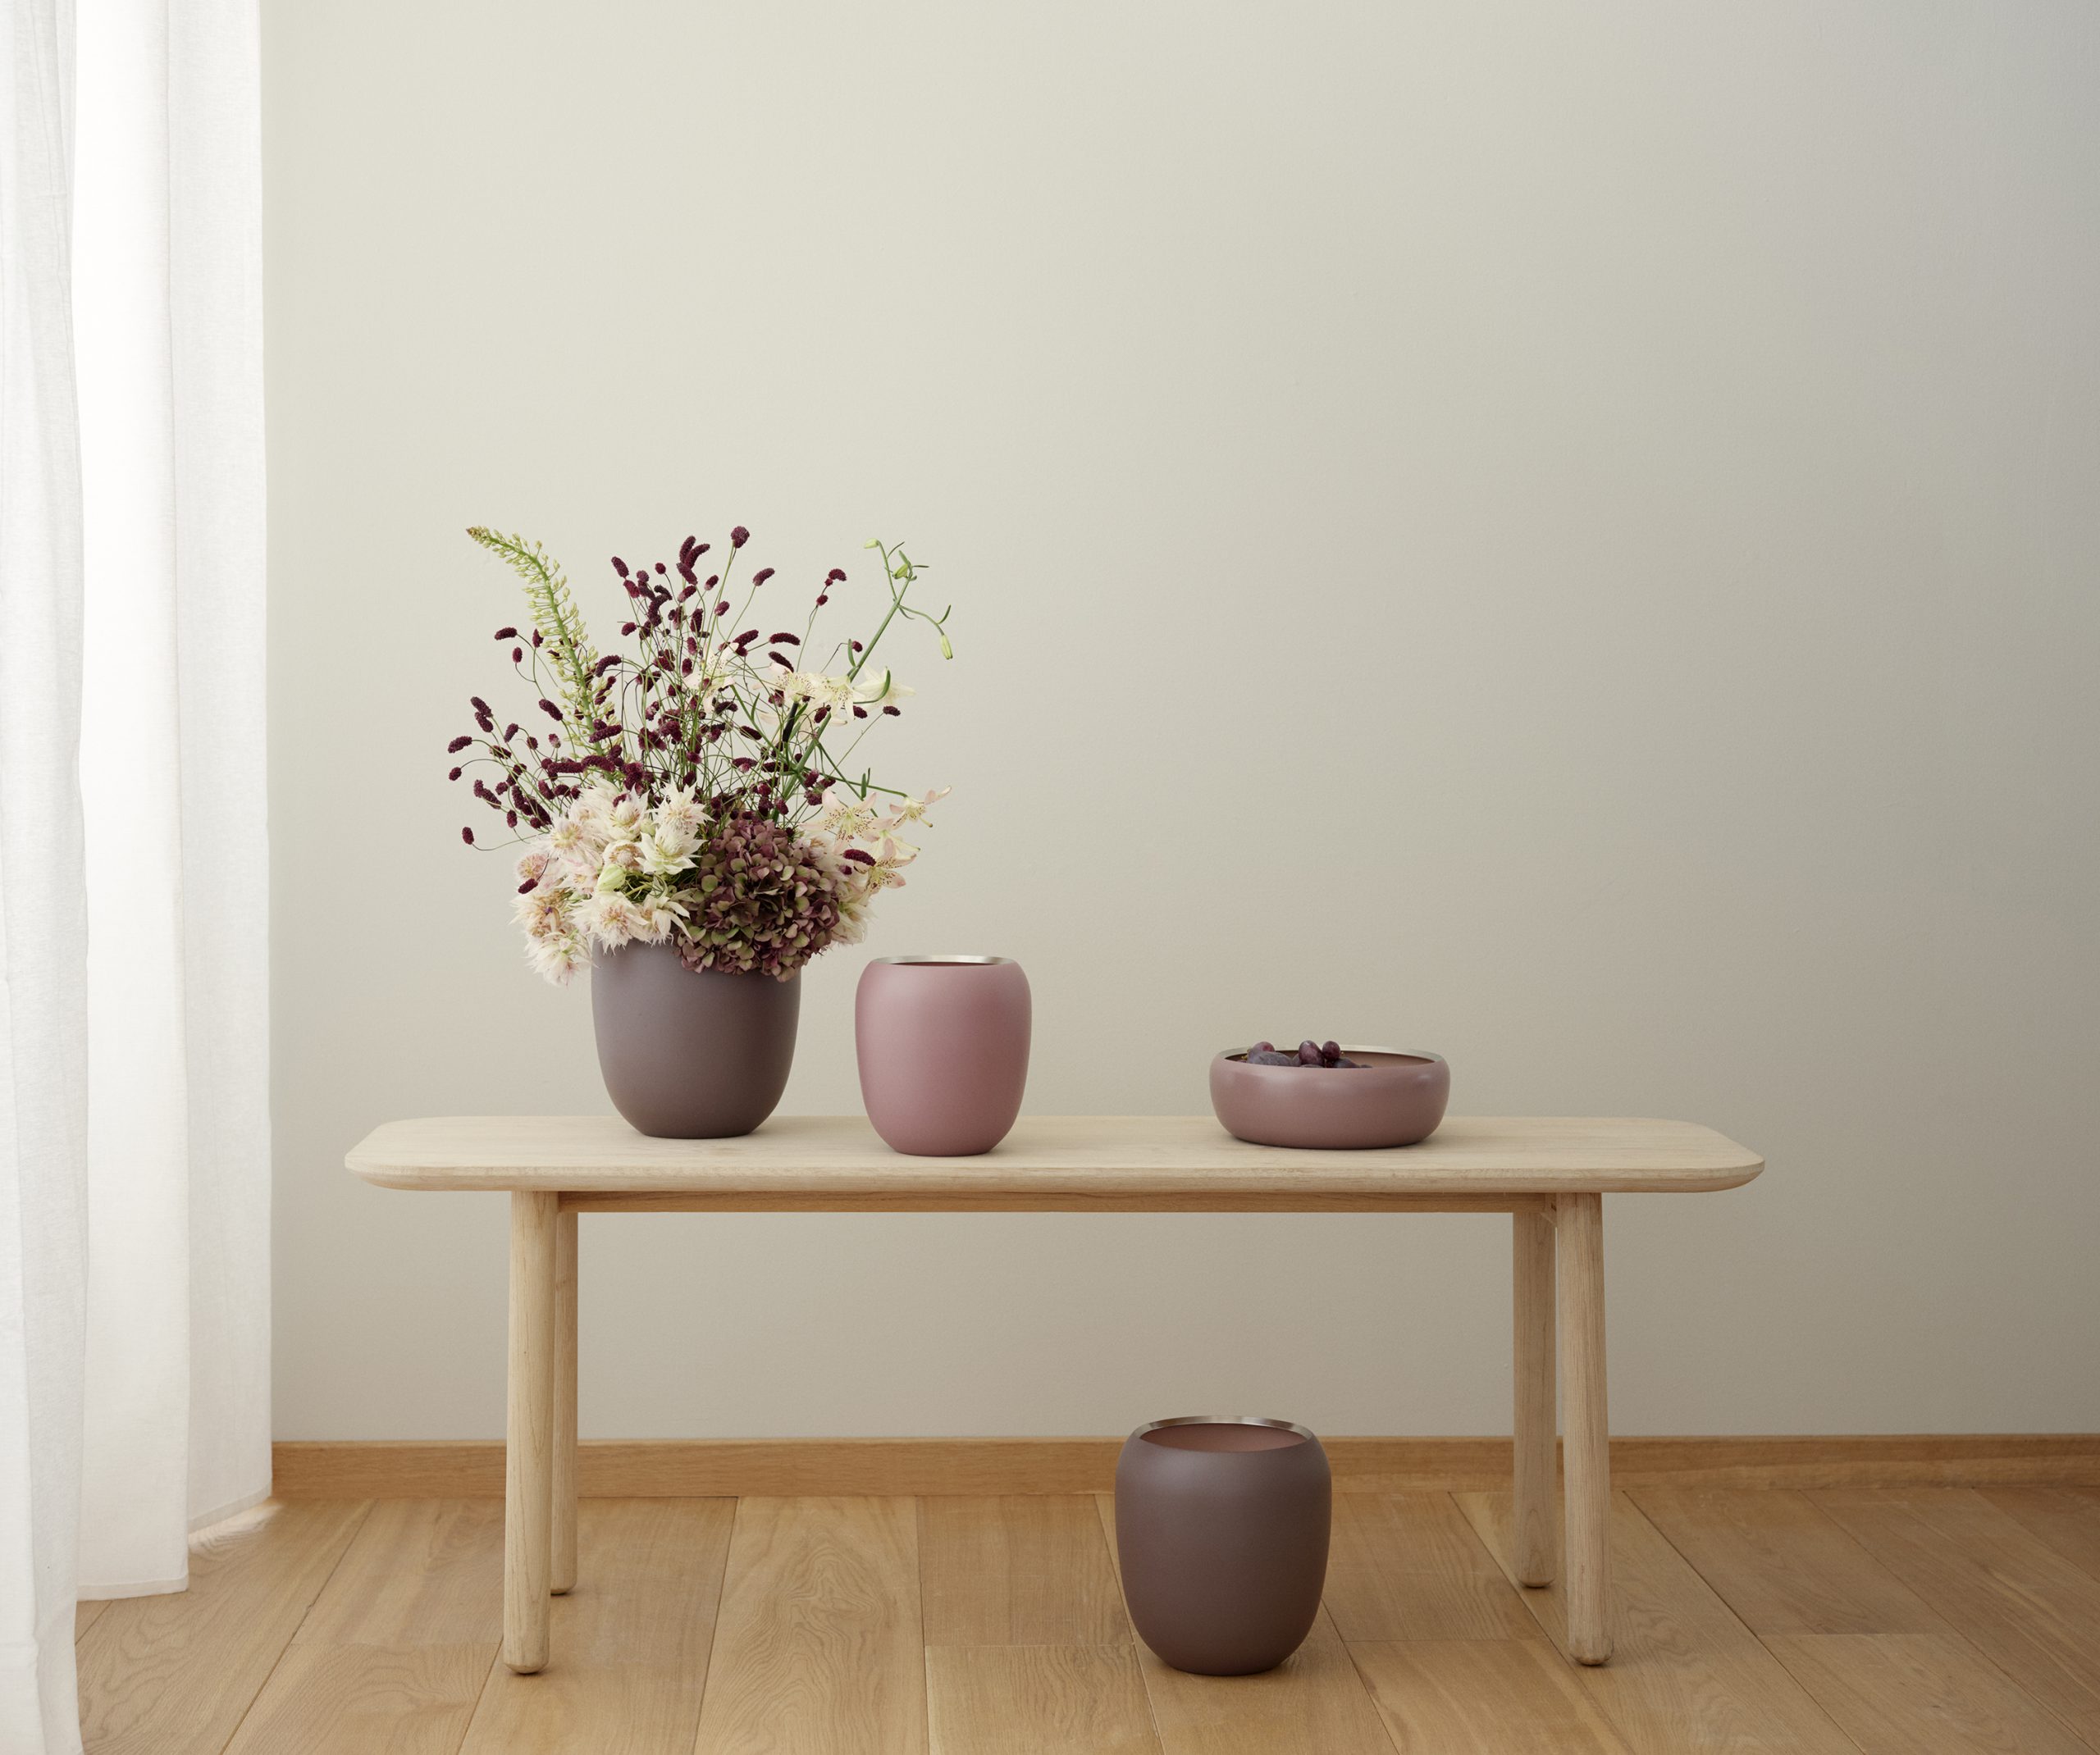 Ora Vases designed by Debiasi Sandri for Stelton